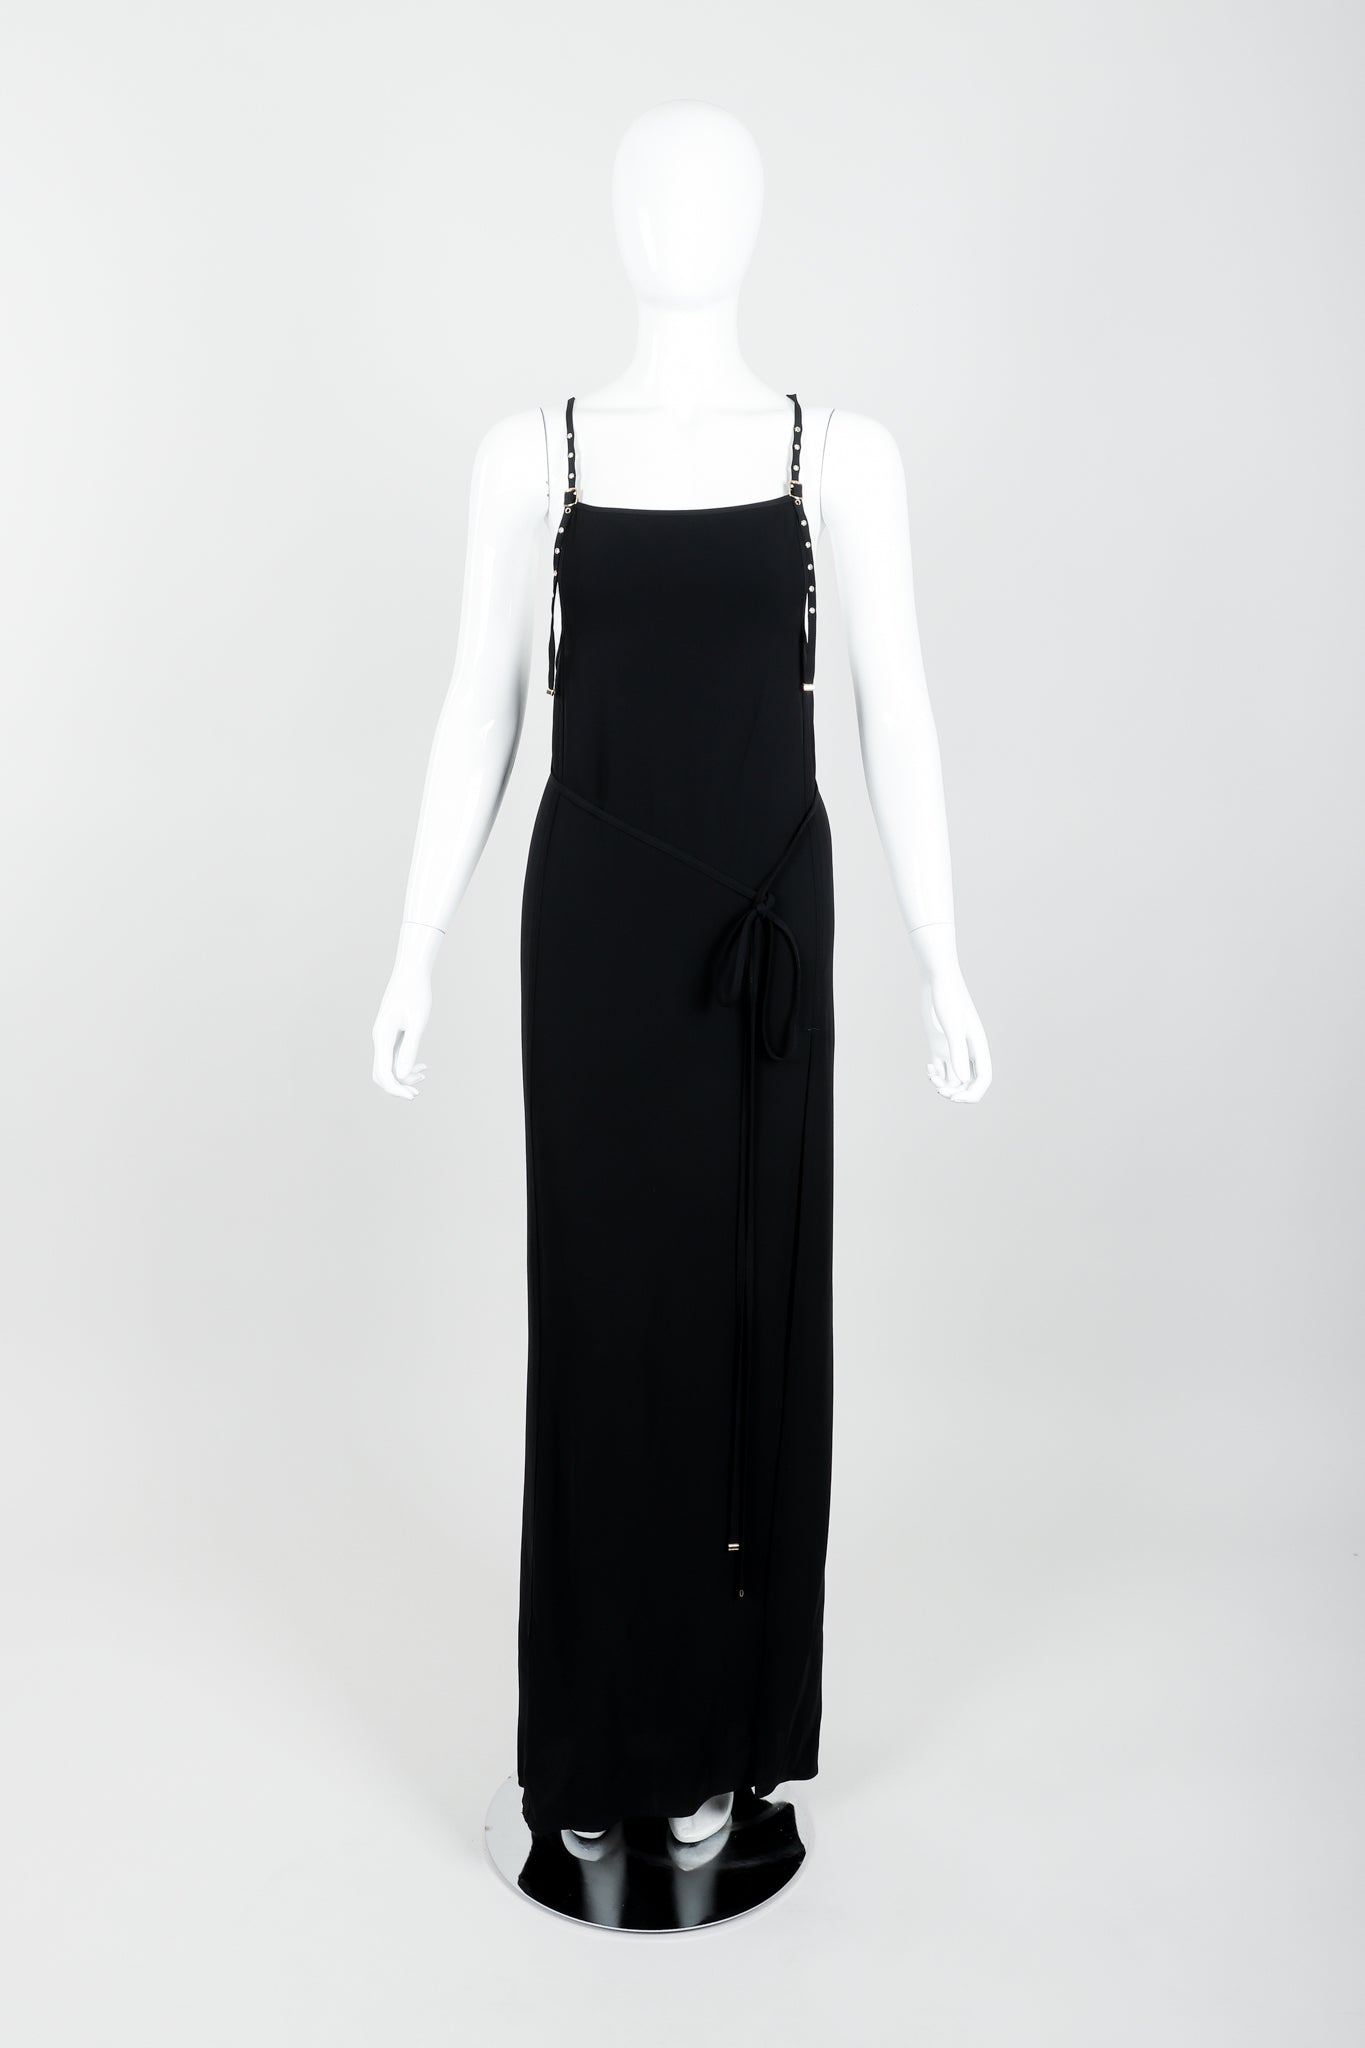 Vintage Jean Paul Gaultier Crepe Grommet Strap Gown w/ High Slit on Mannequin front untie at Recess